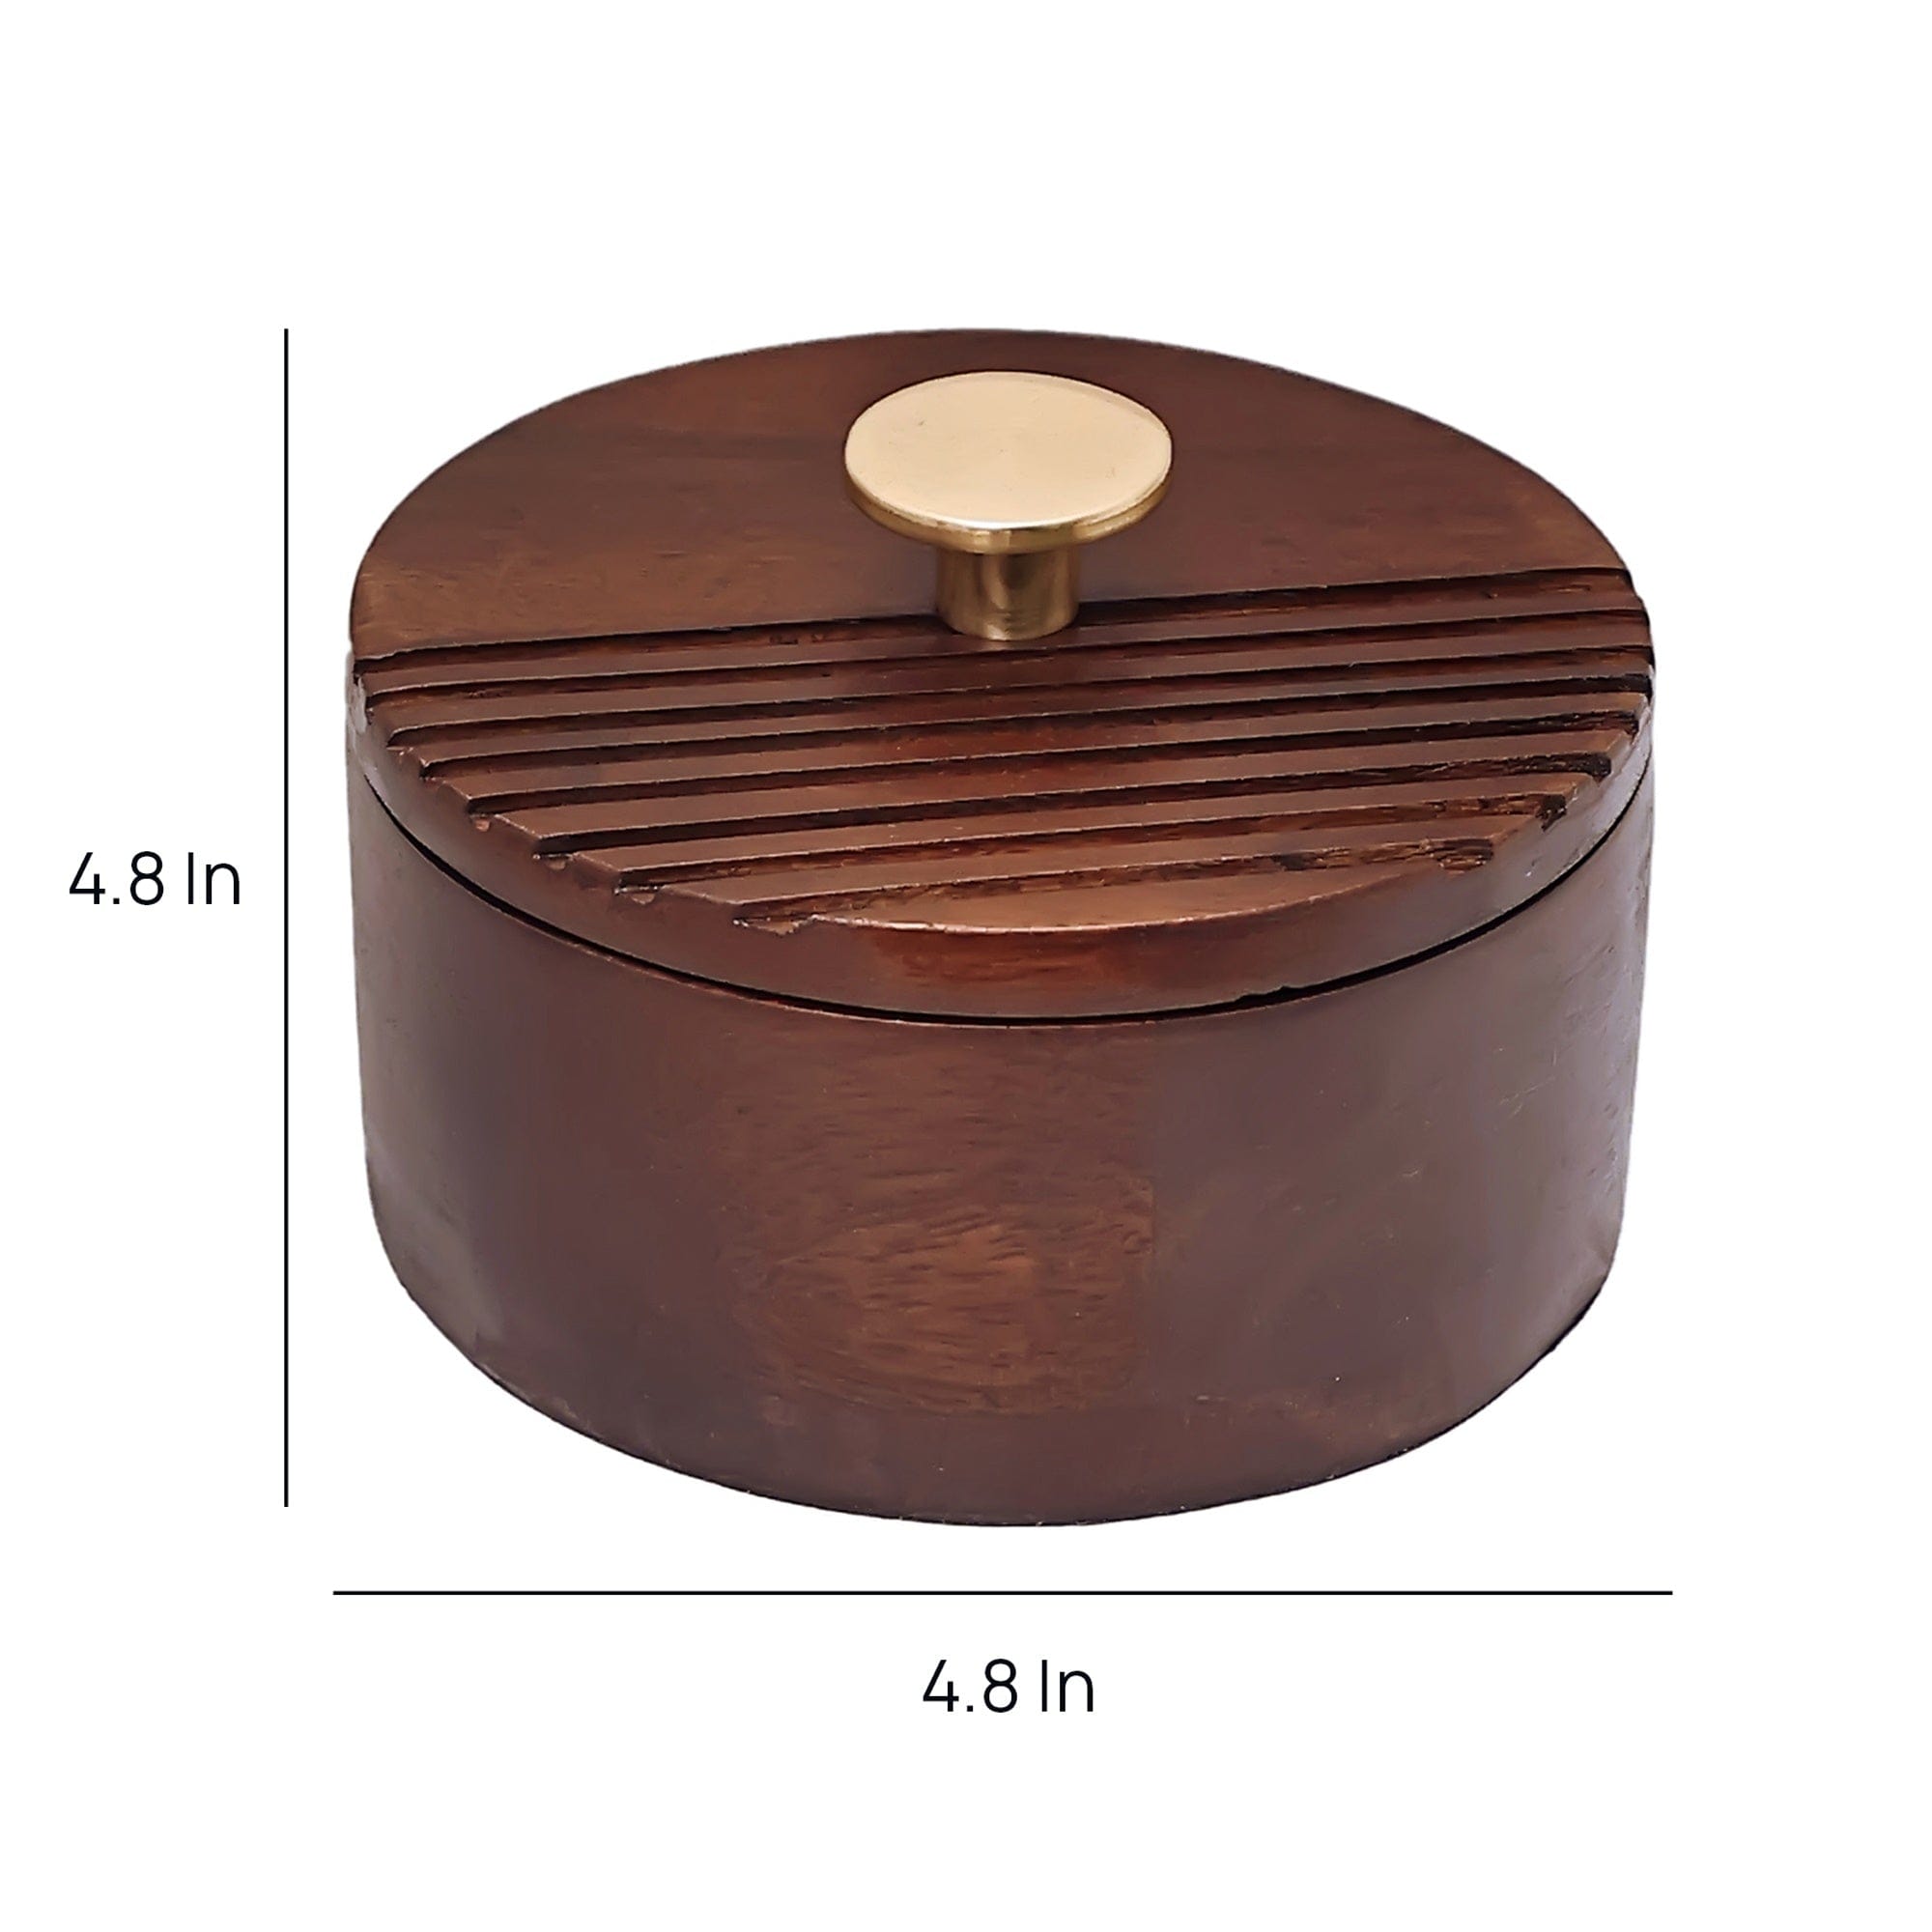 The Artisan's Stripes- Trinket Small Brown Box